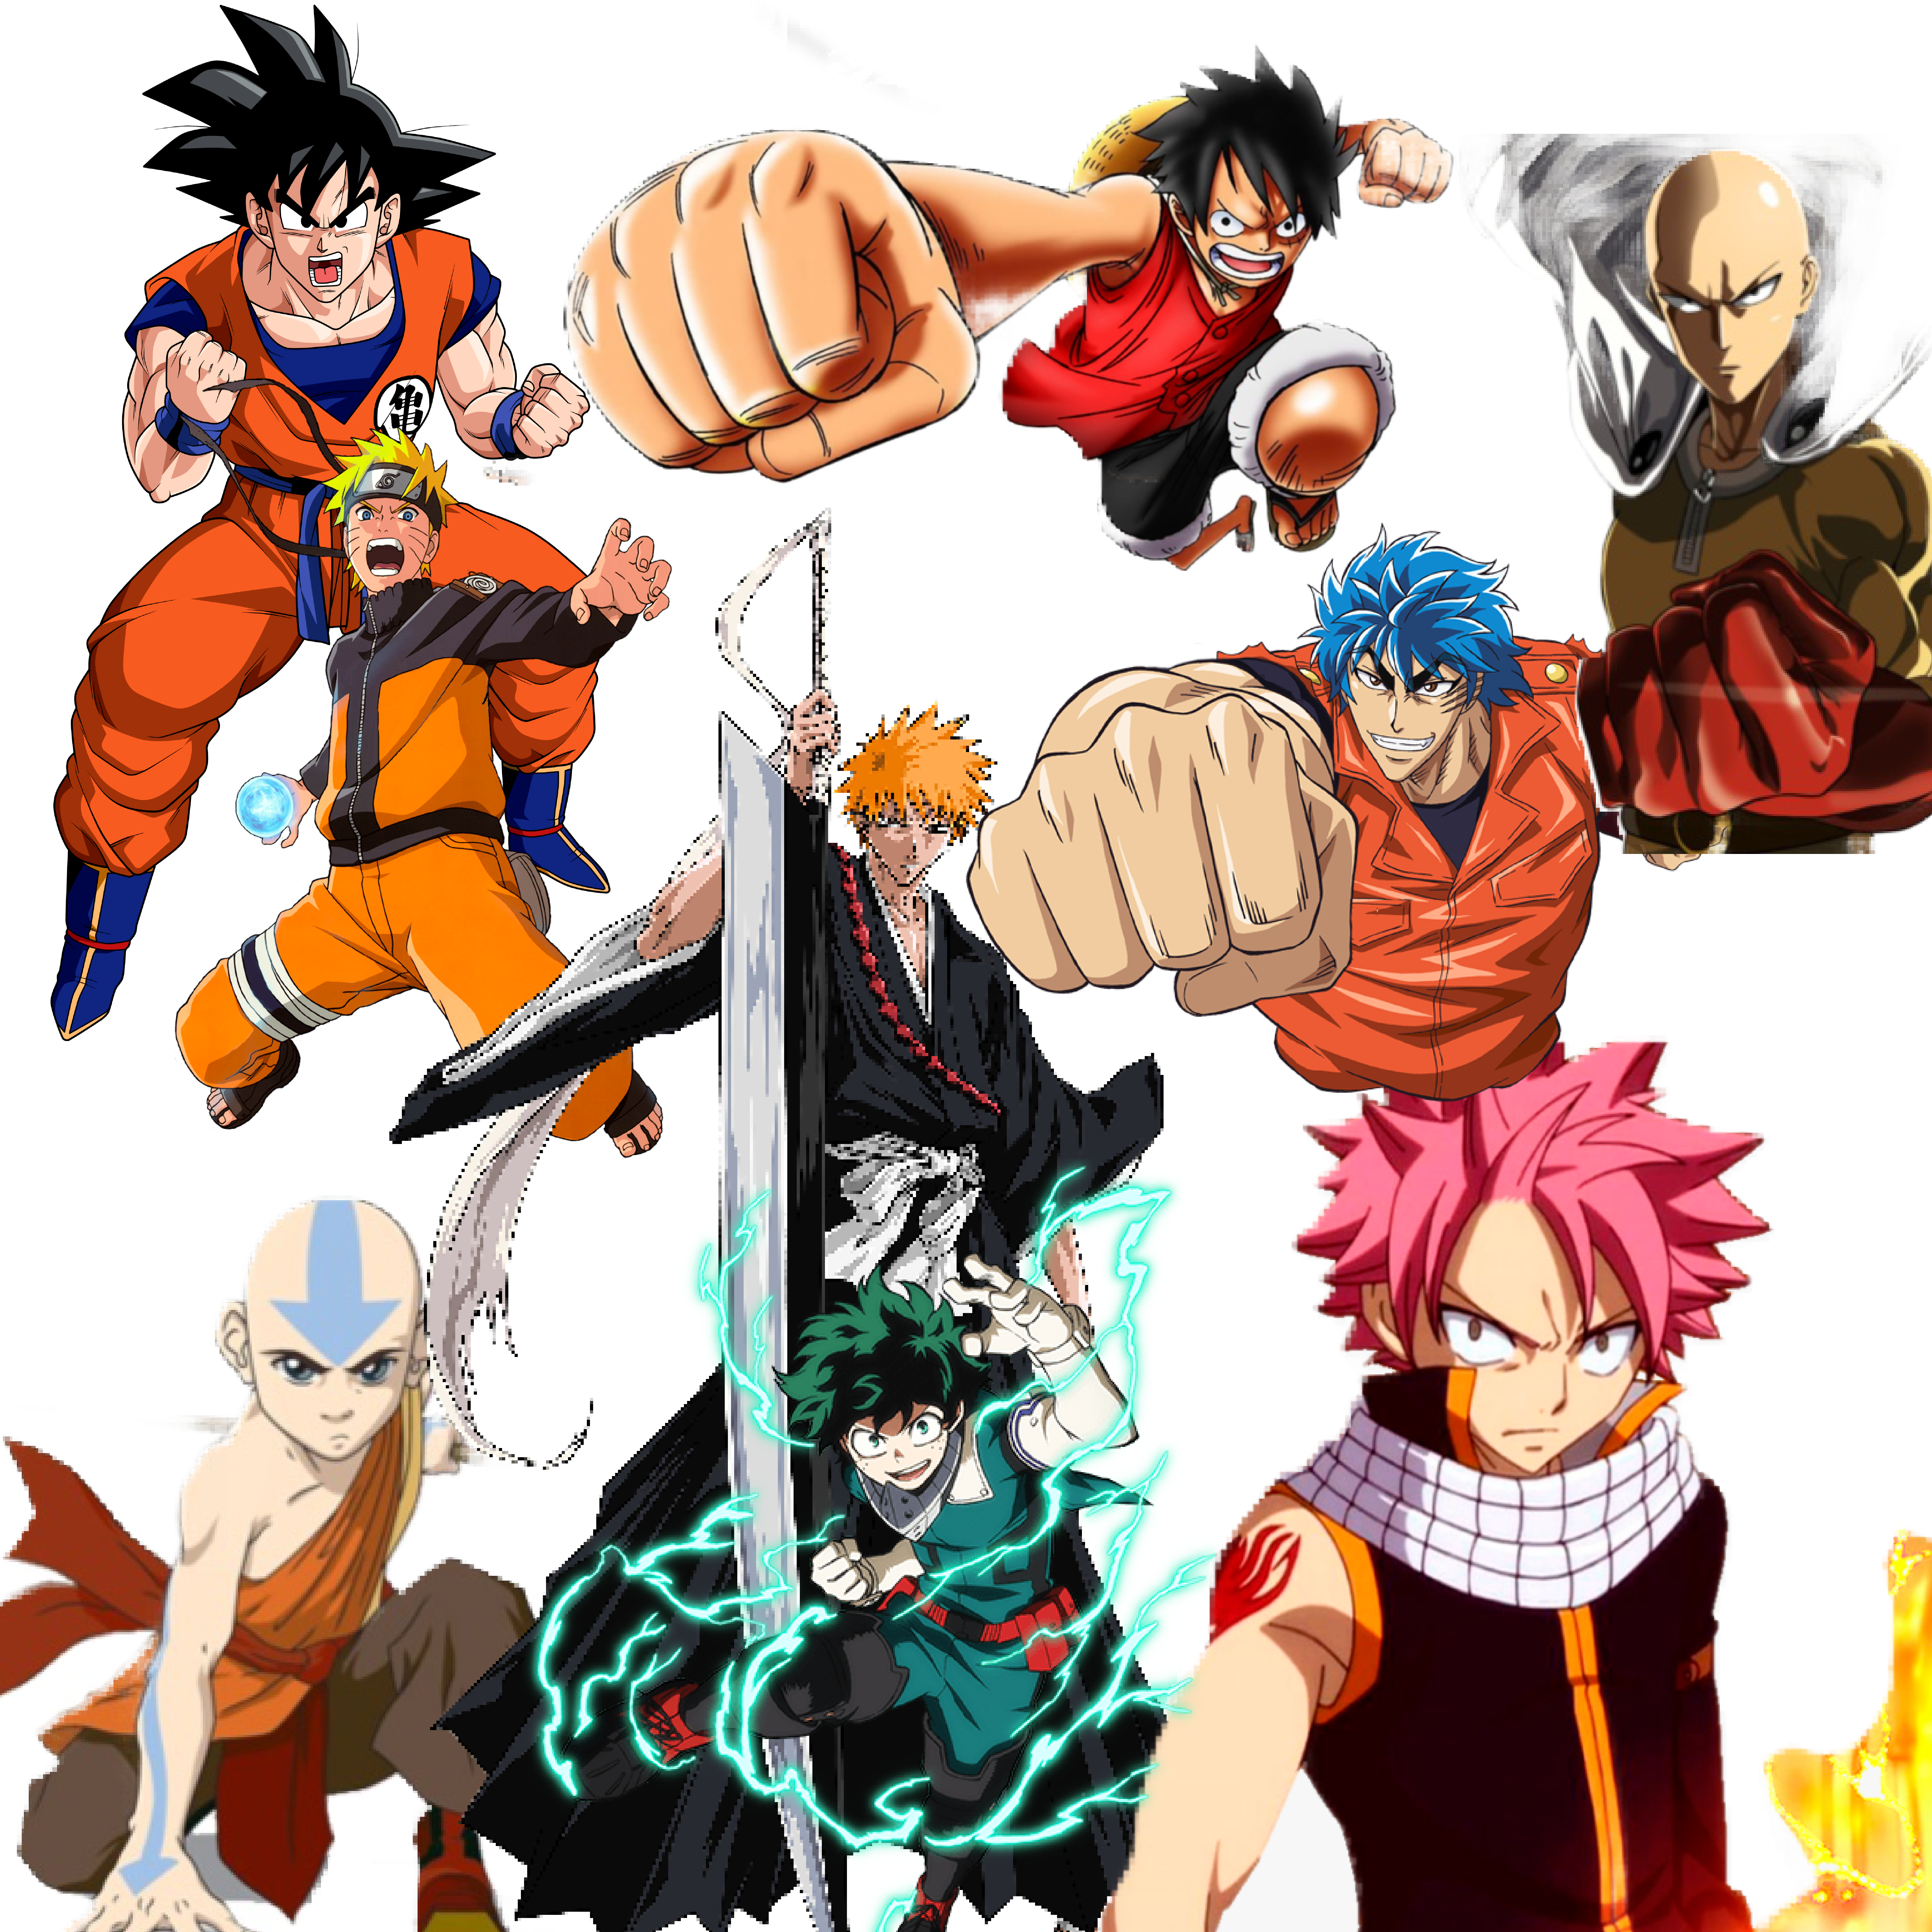 My Anime Heroes by MatthewsRENDERS4477 on DeviantArt